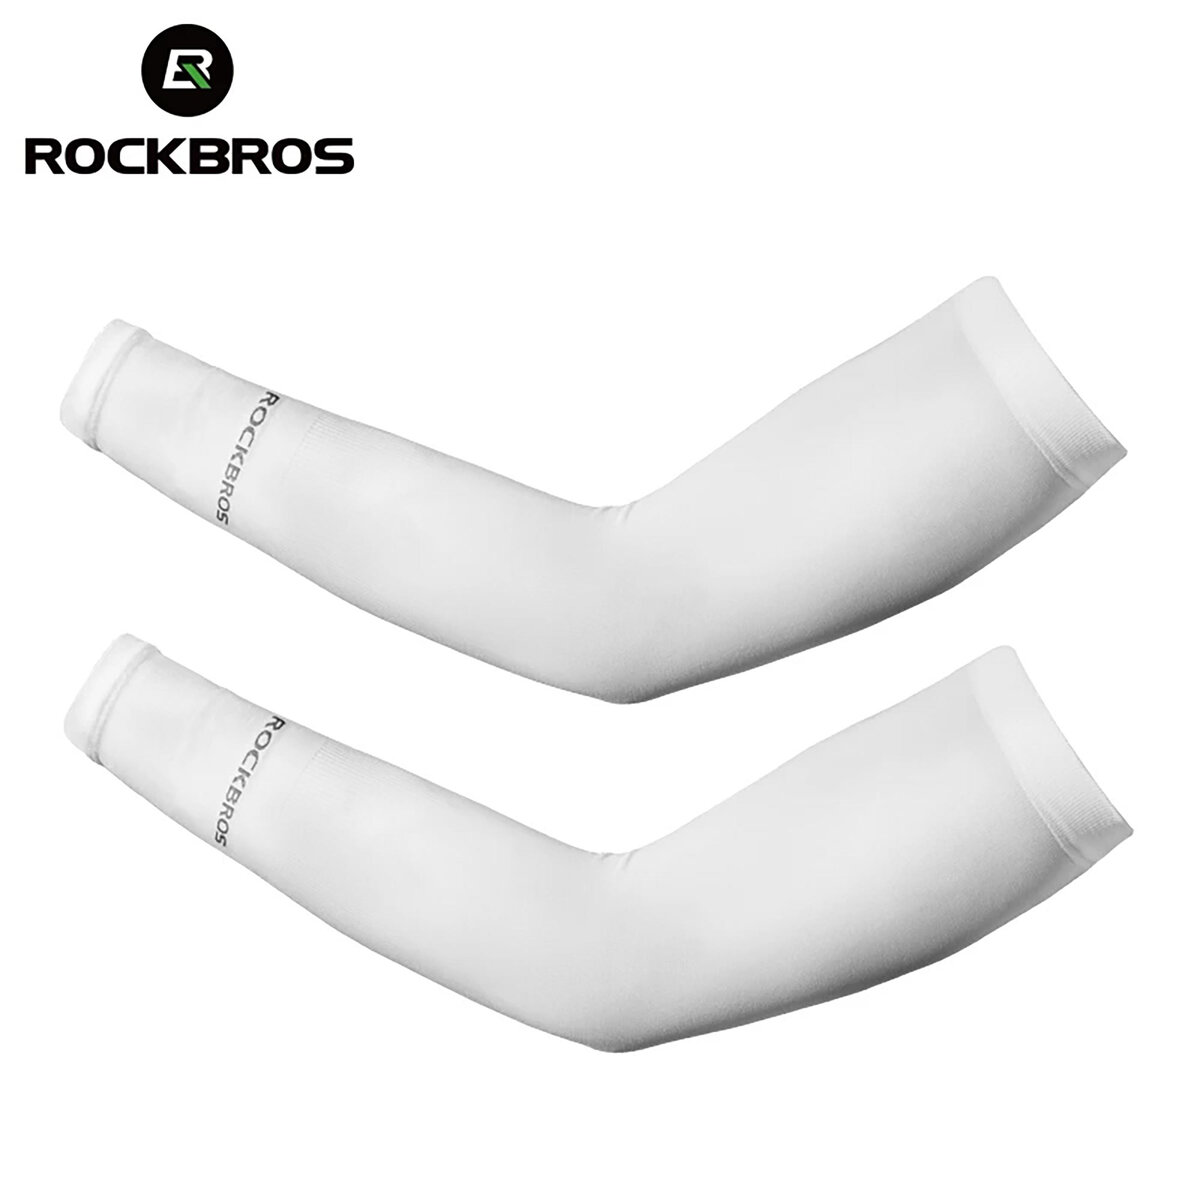 ROCKBROS Cycling Arm Sleeves XT9002W White